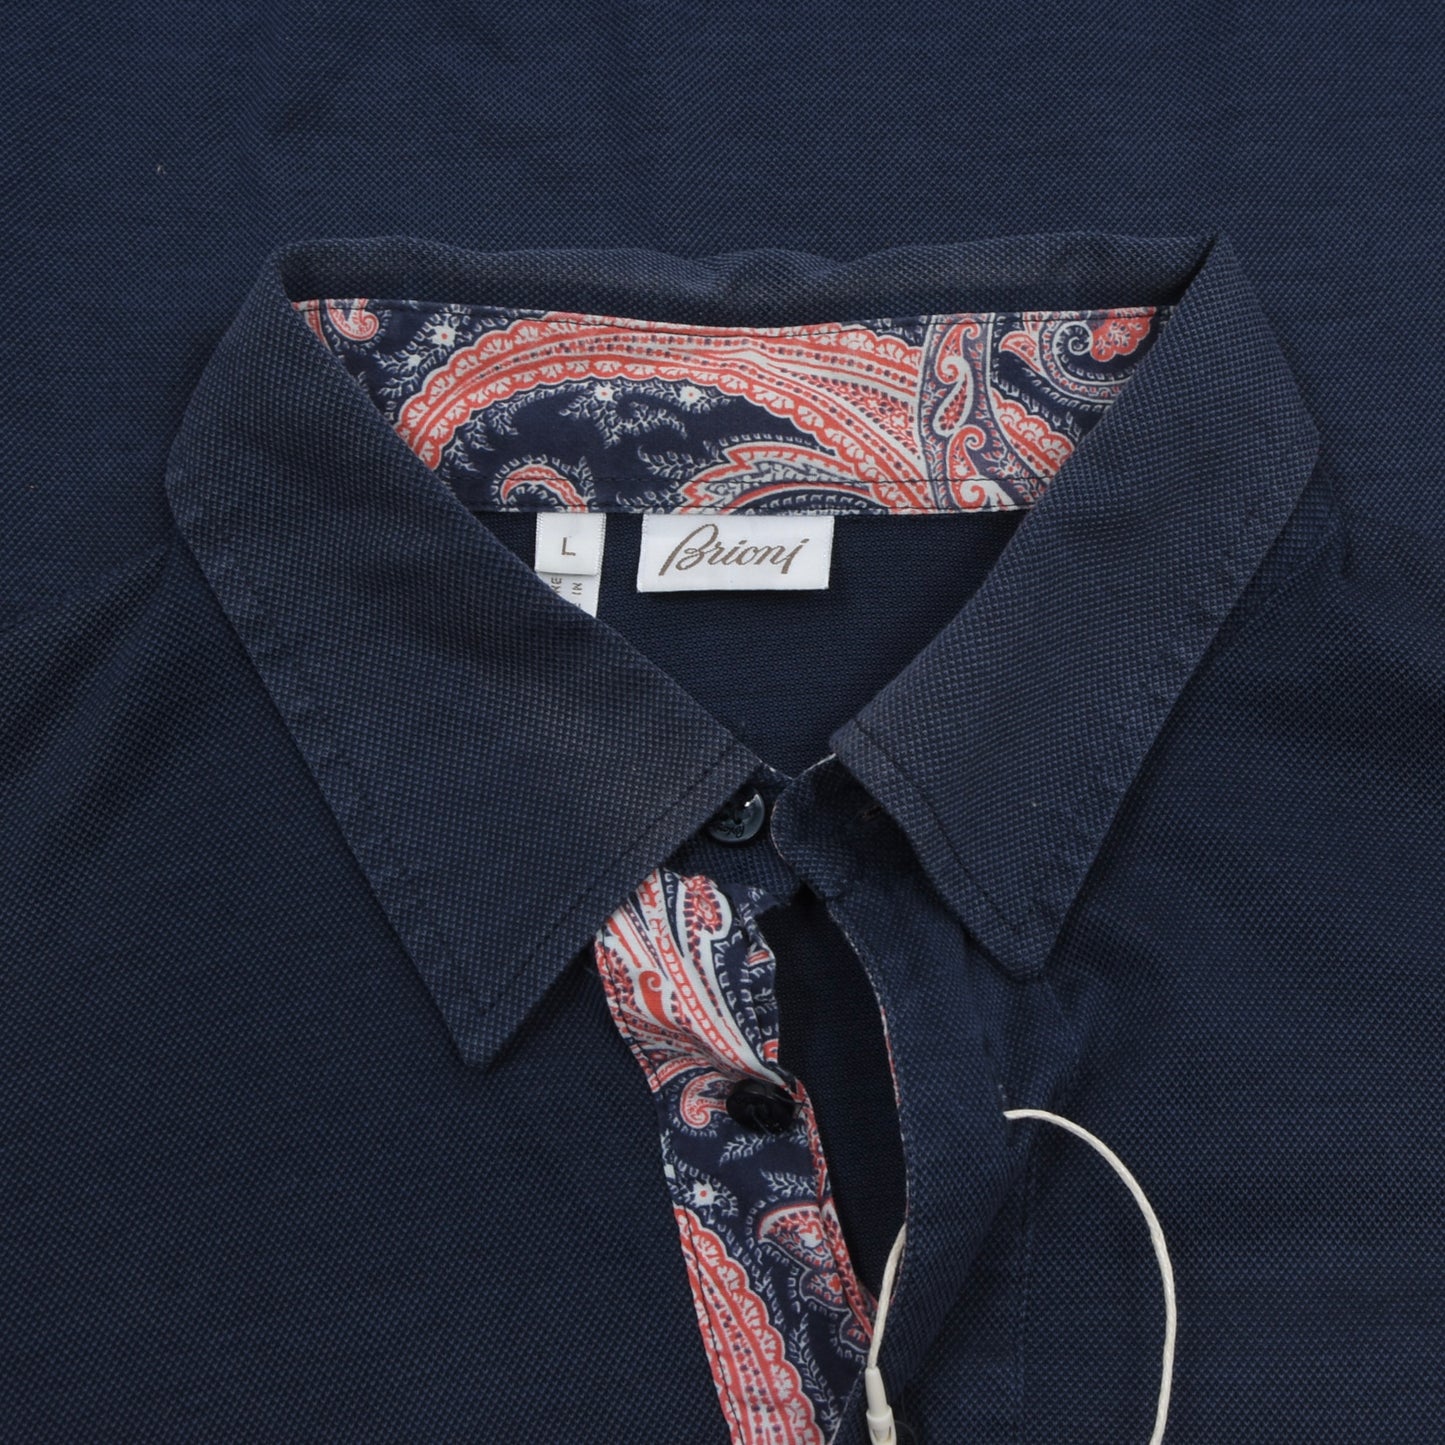 Brioni Cotton Polo Shirt Size L - Navy Blue